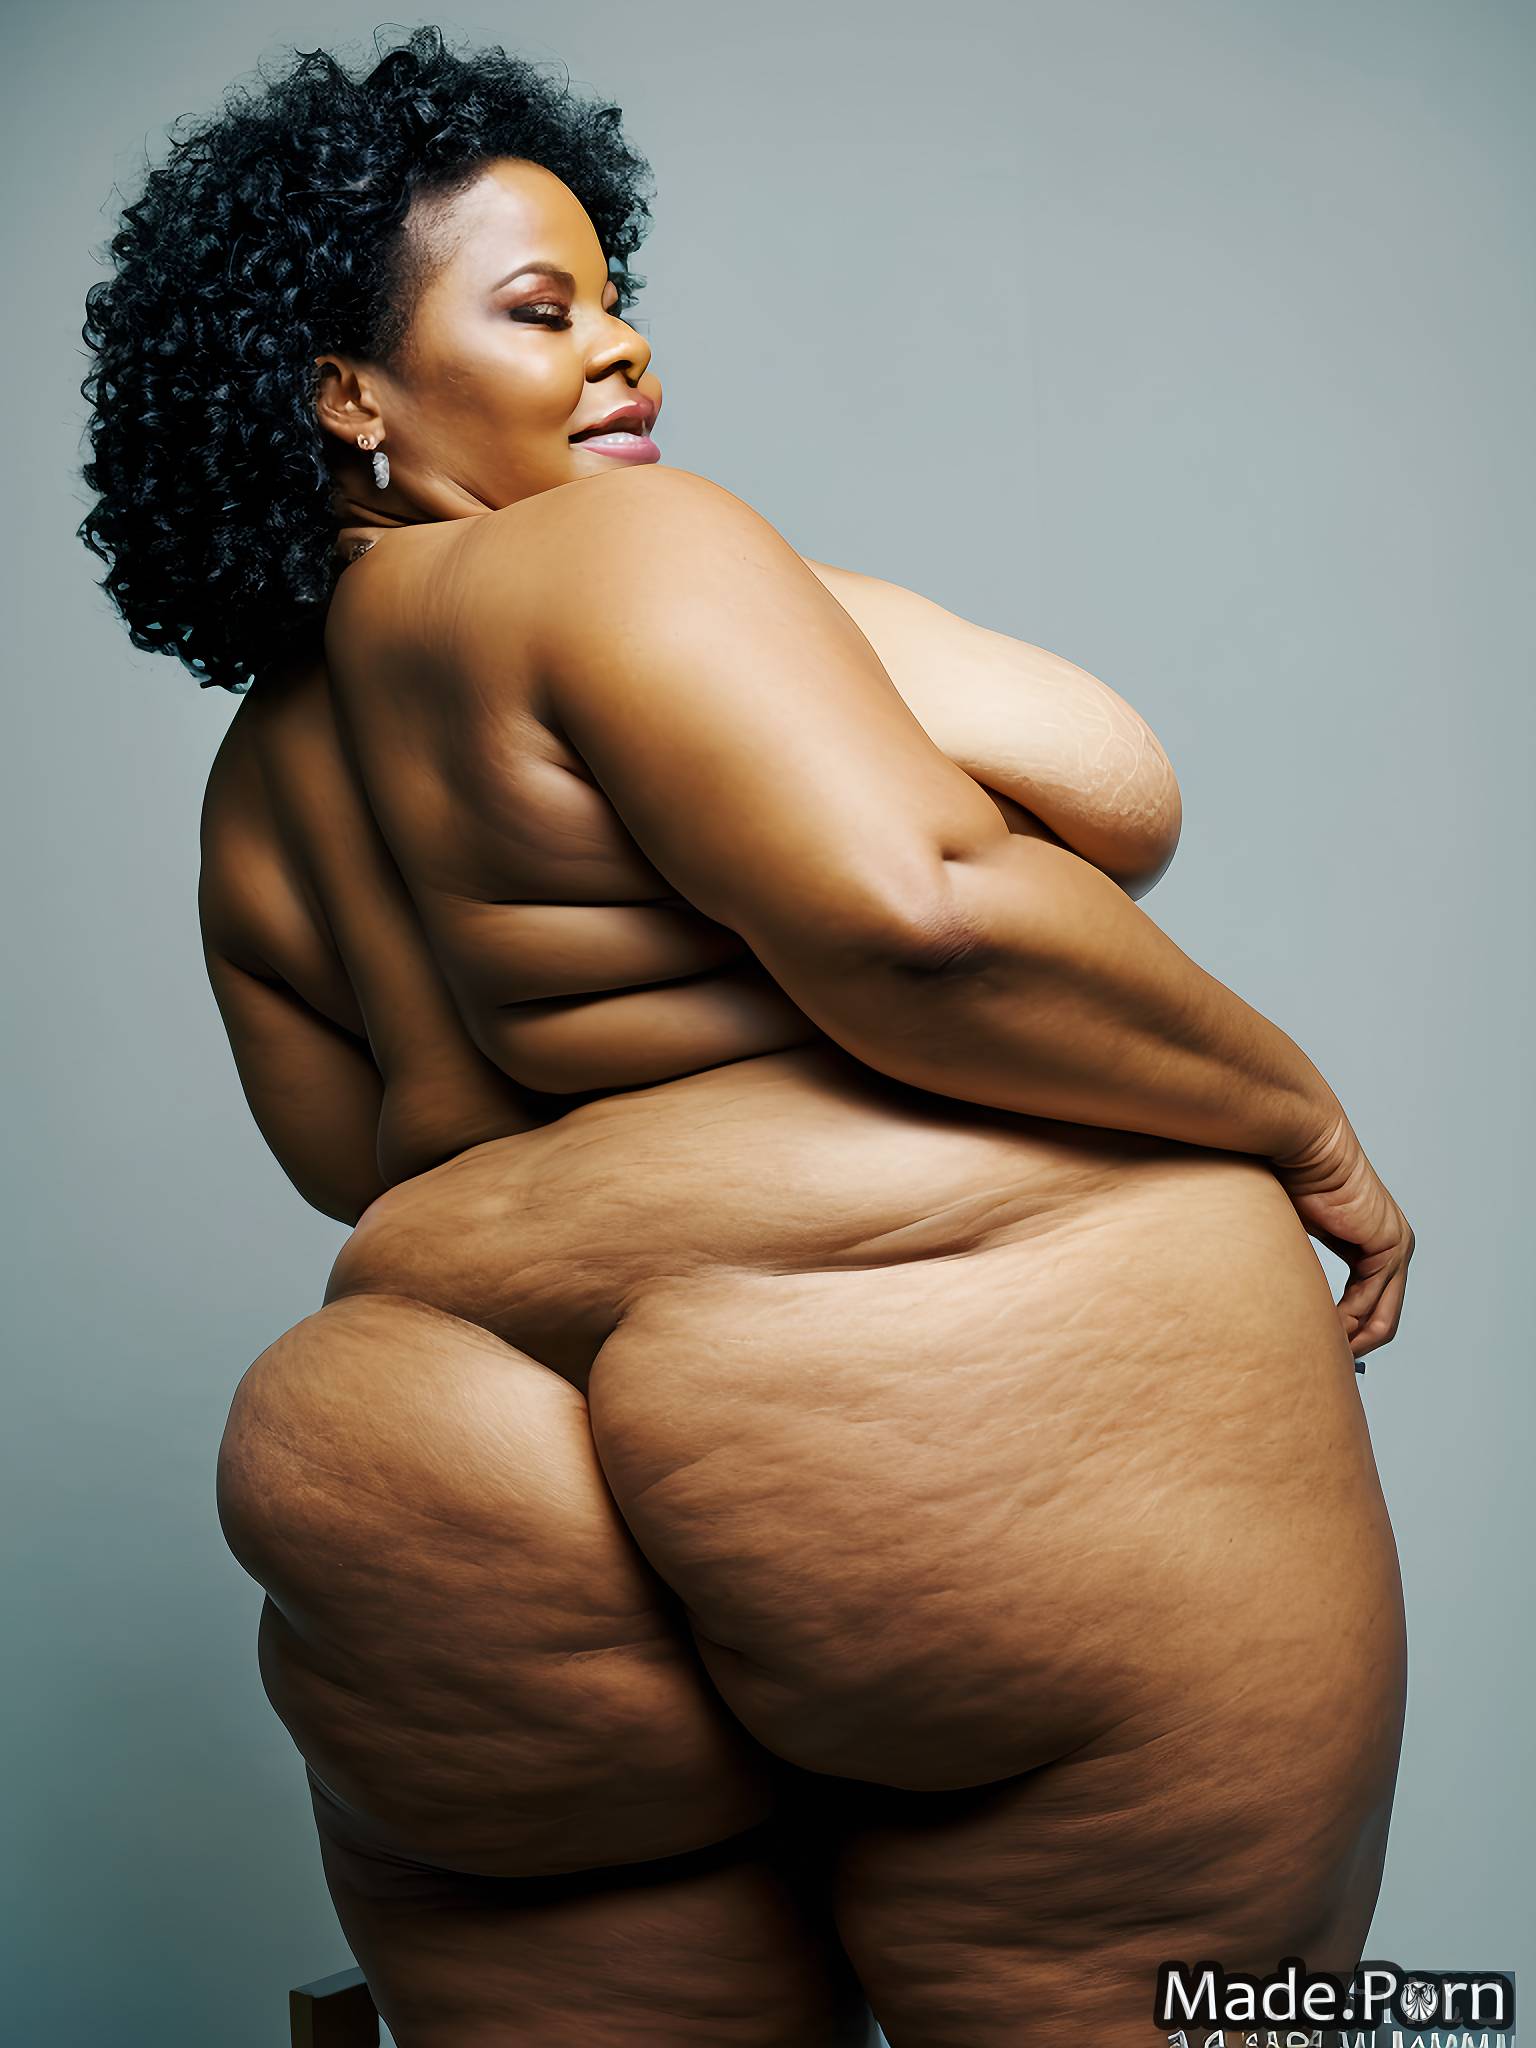 ssbbw nude sideview seductive bimbo woman photo studio